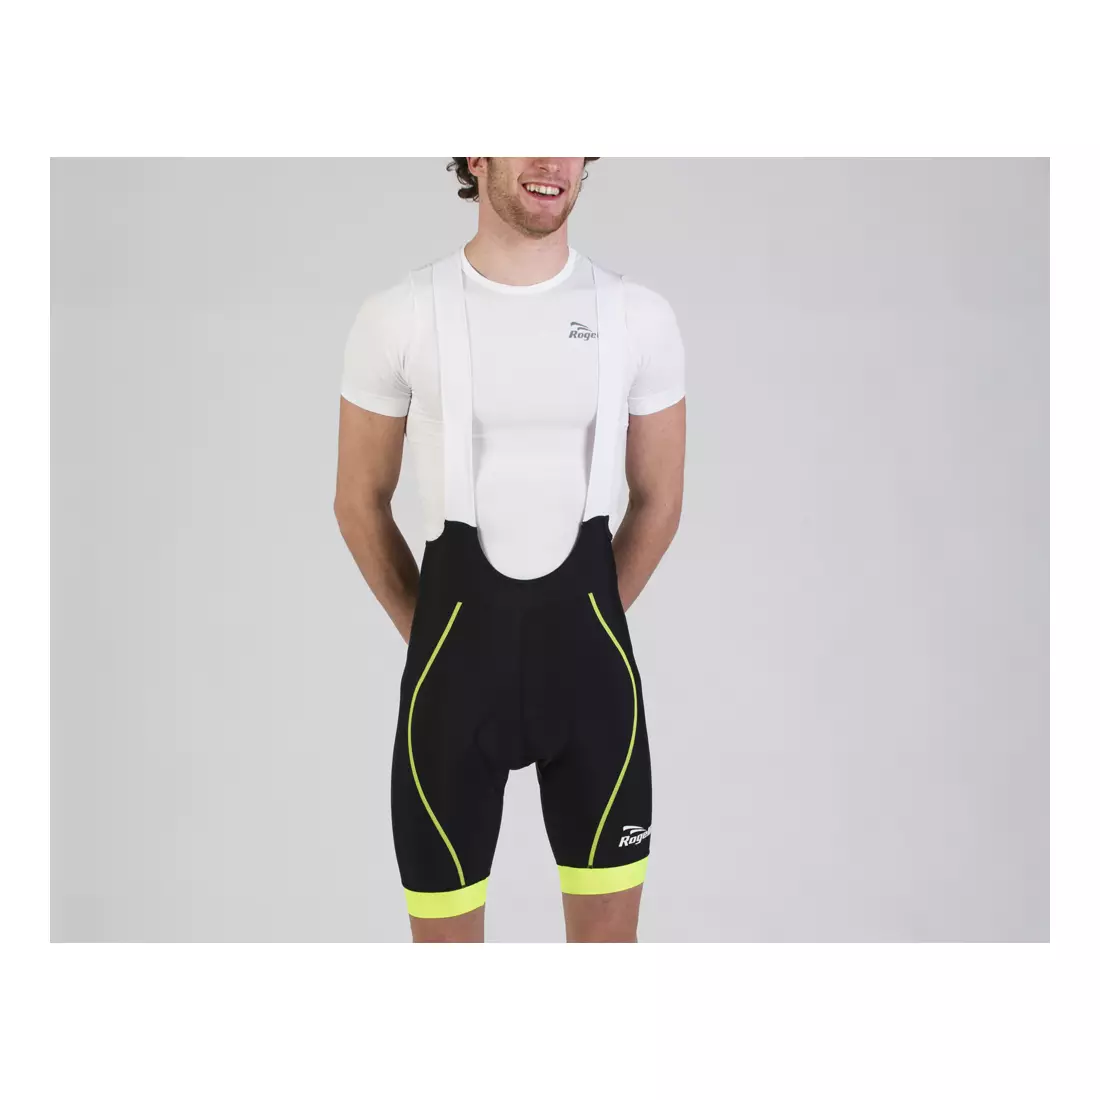 ROGELLI PORRENA 2.0 men's cycling shorts, harness, black-gray